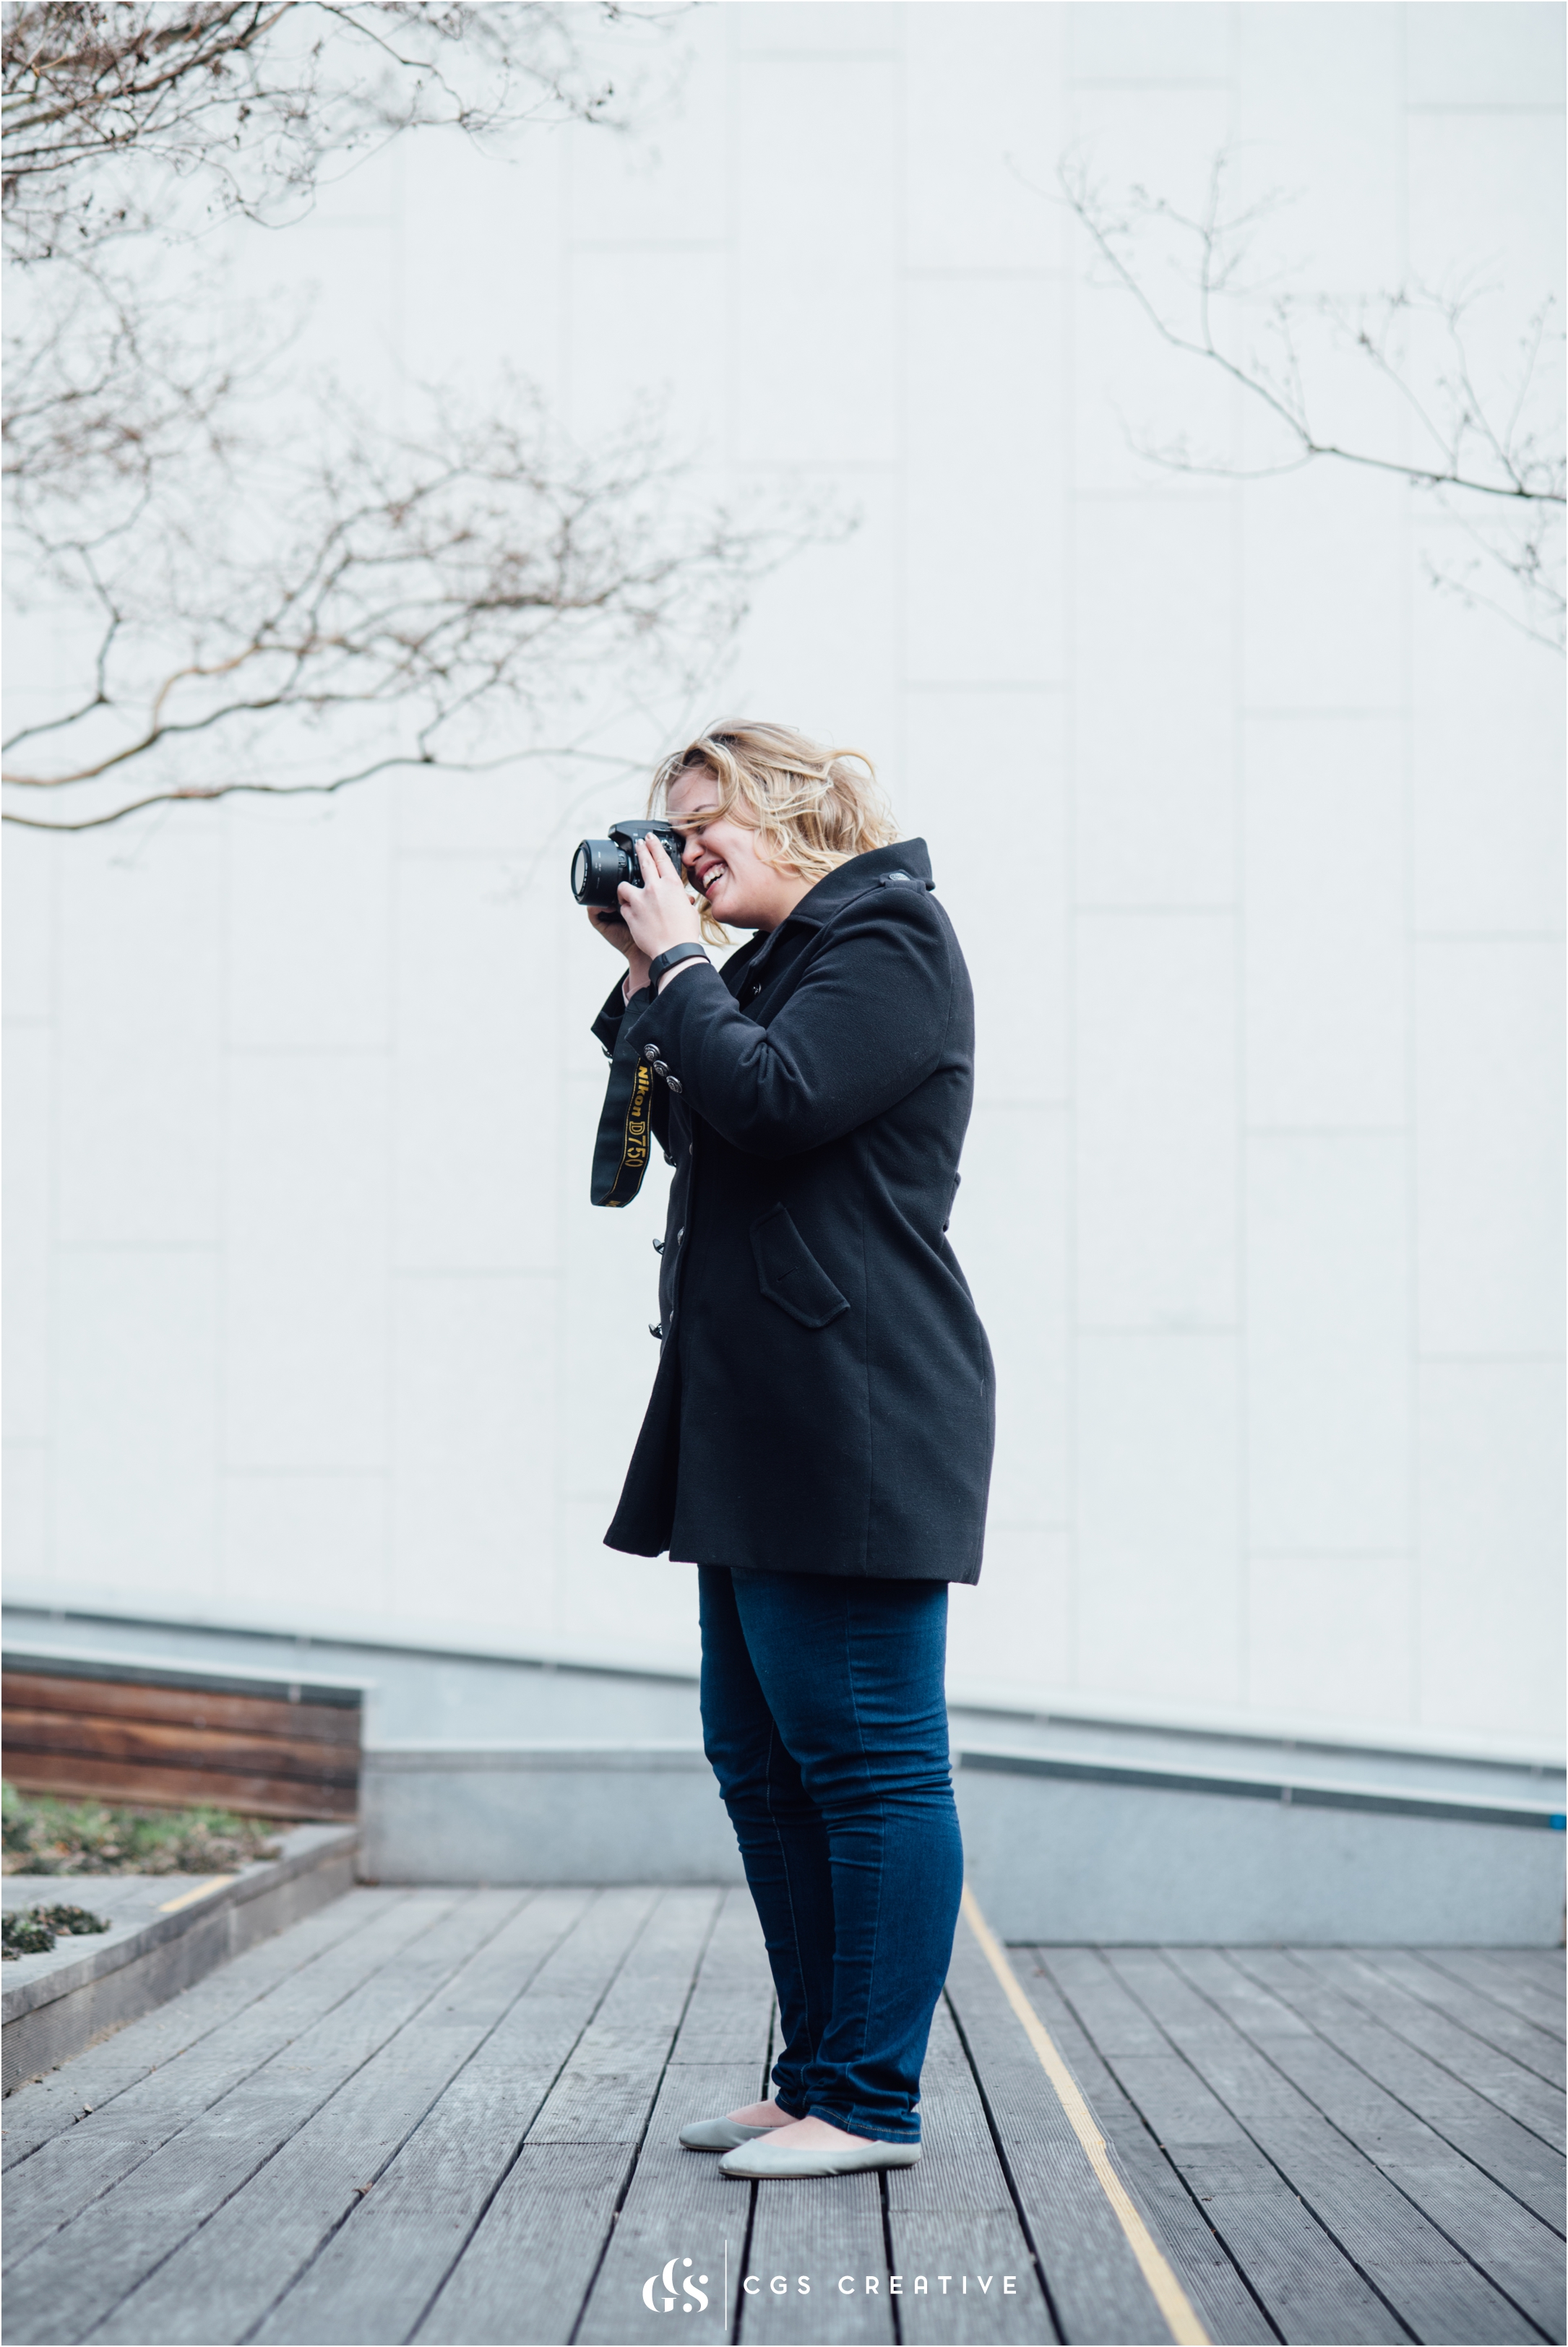 Lorryn Smit Photographer Styled Shoot by Roxy Hutton CityGirlSearching 39.JPG